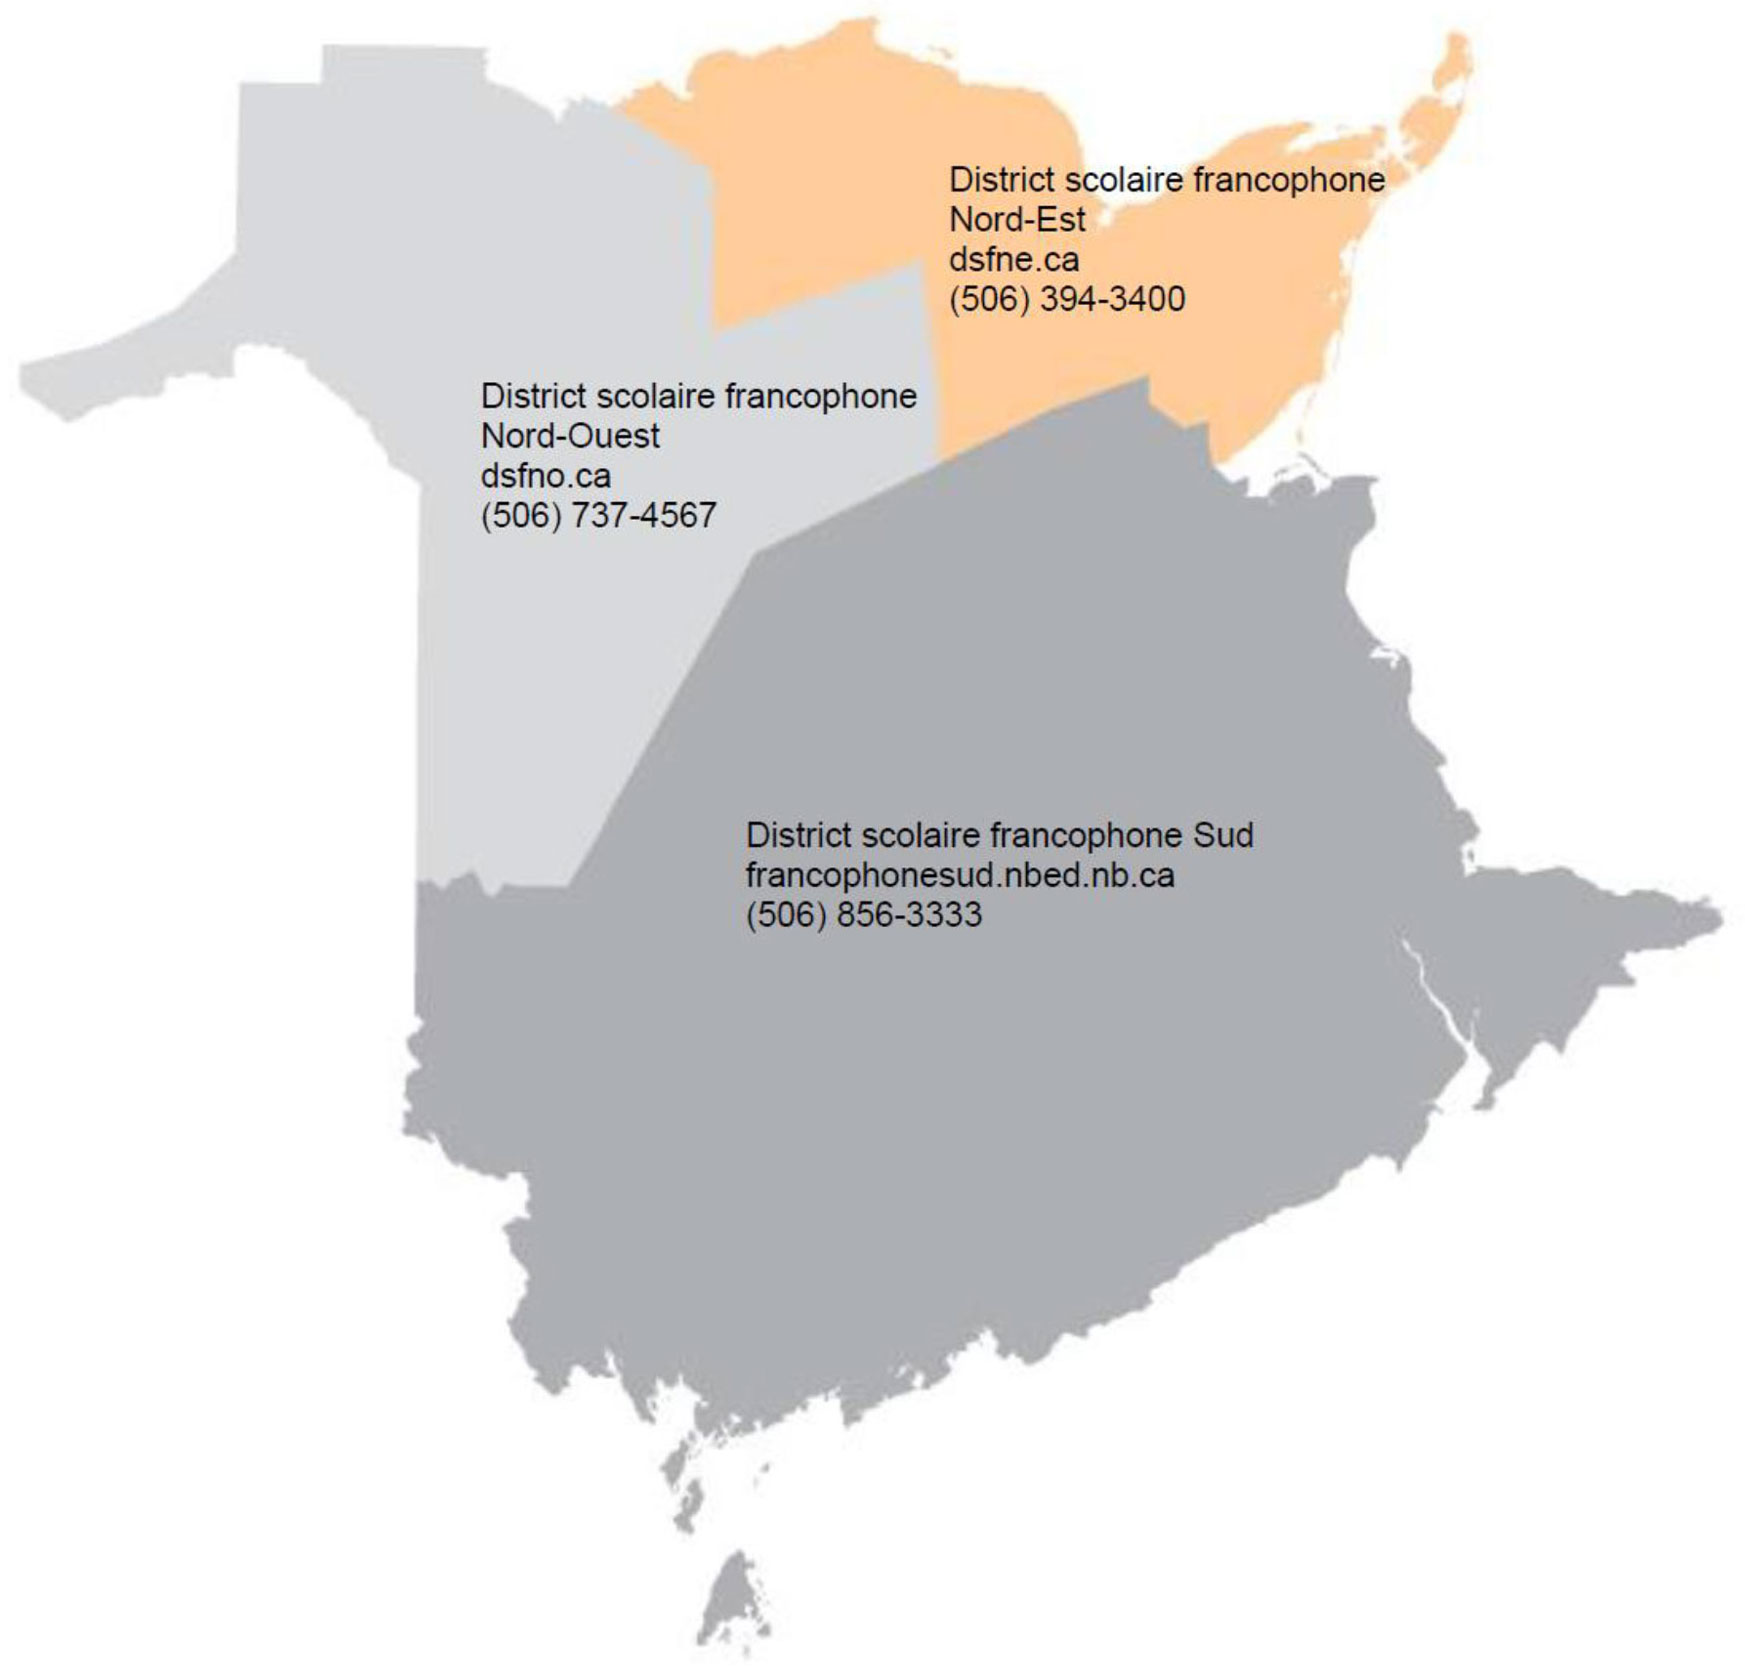 Francophone School Districts